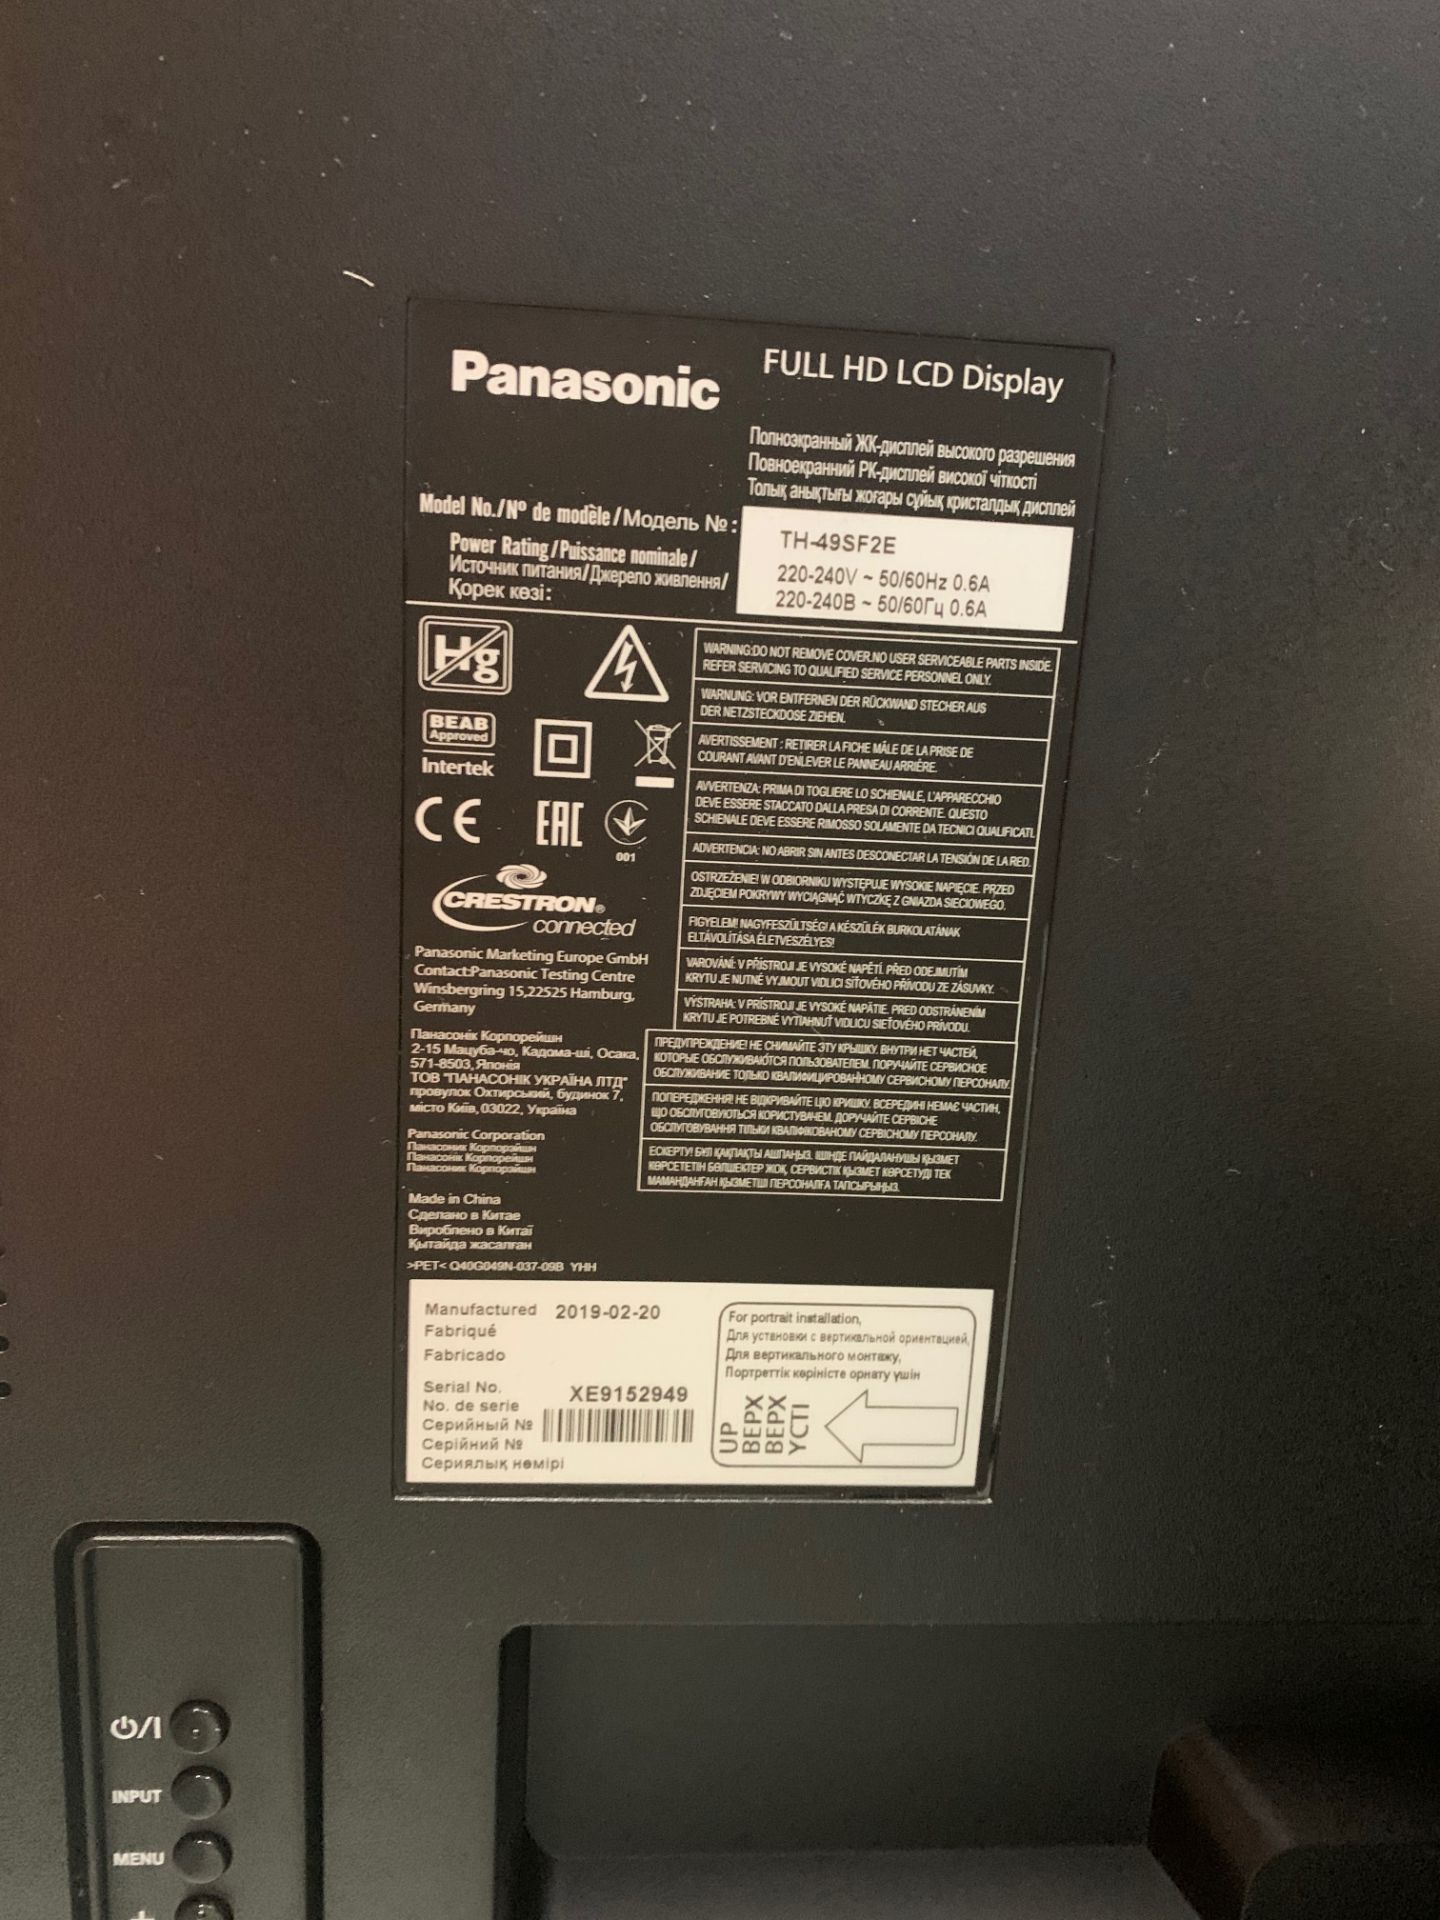 Panasonic 49" Full HD LCD Display TH-495F2E Plasma Screen Serial No XE9222437 DOM 03/2019 2 HDMI - Image 2 of 3